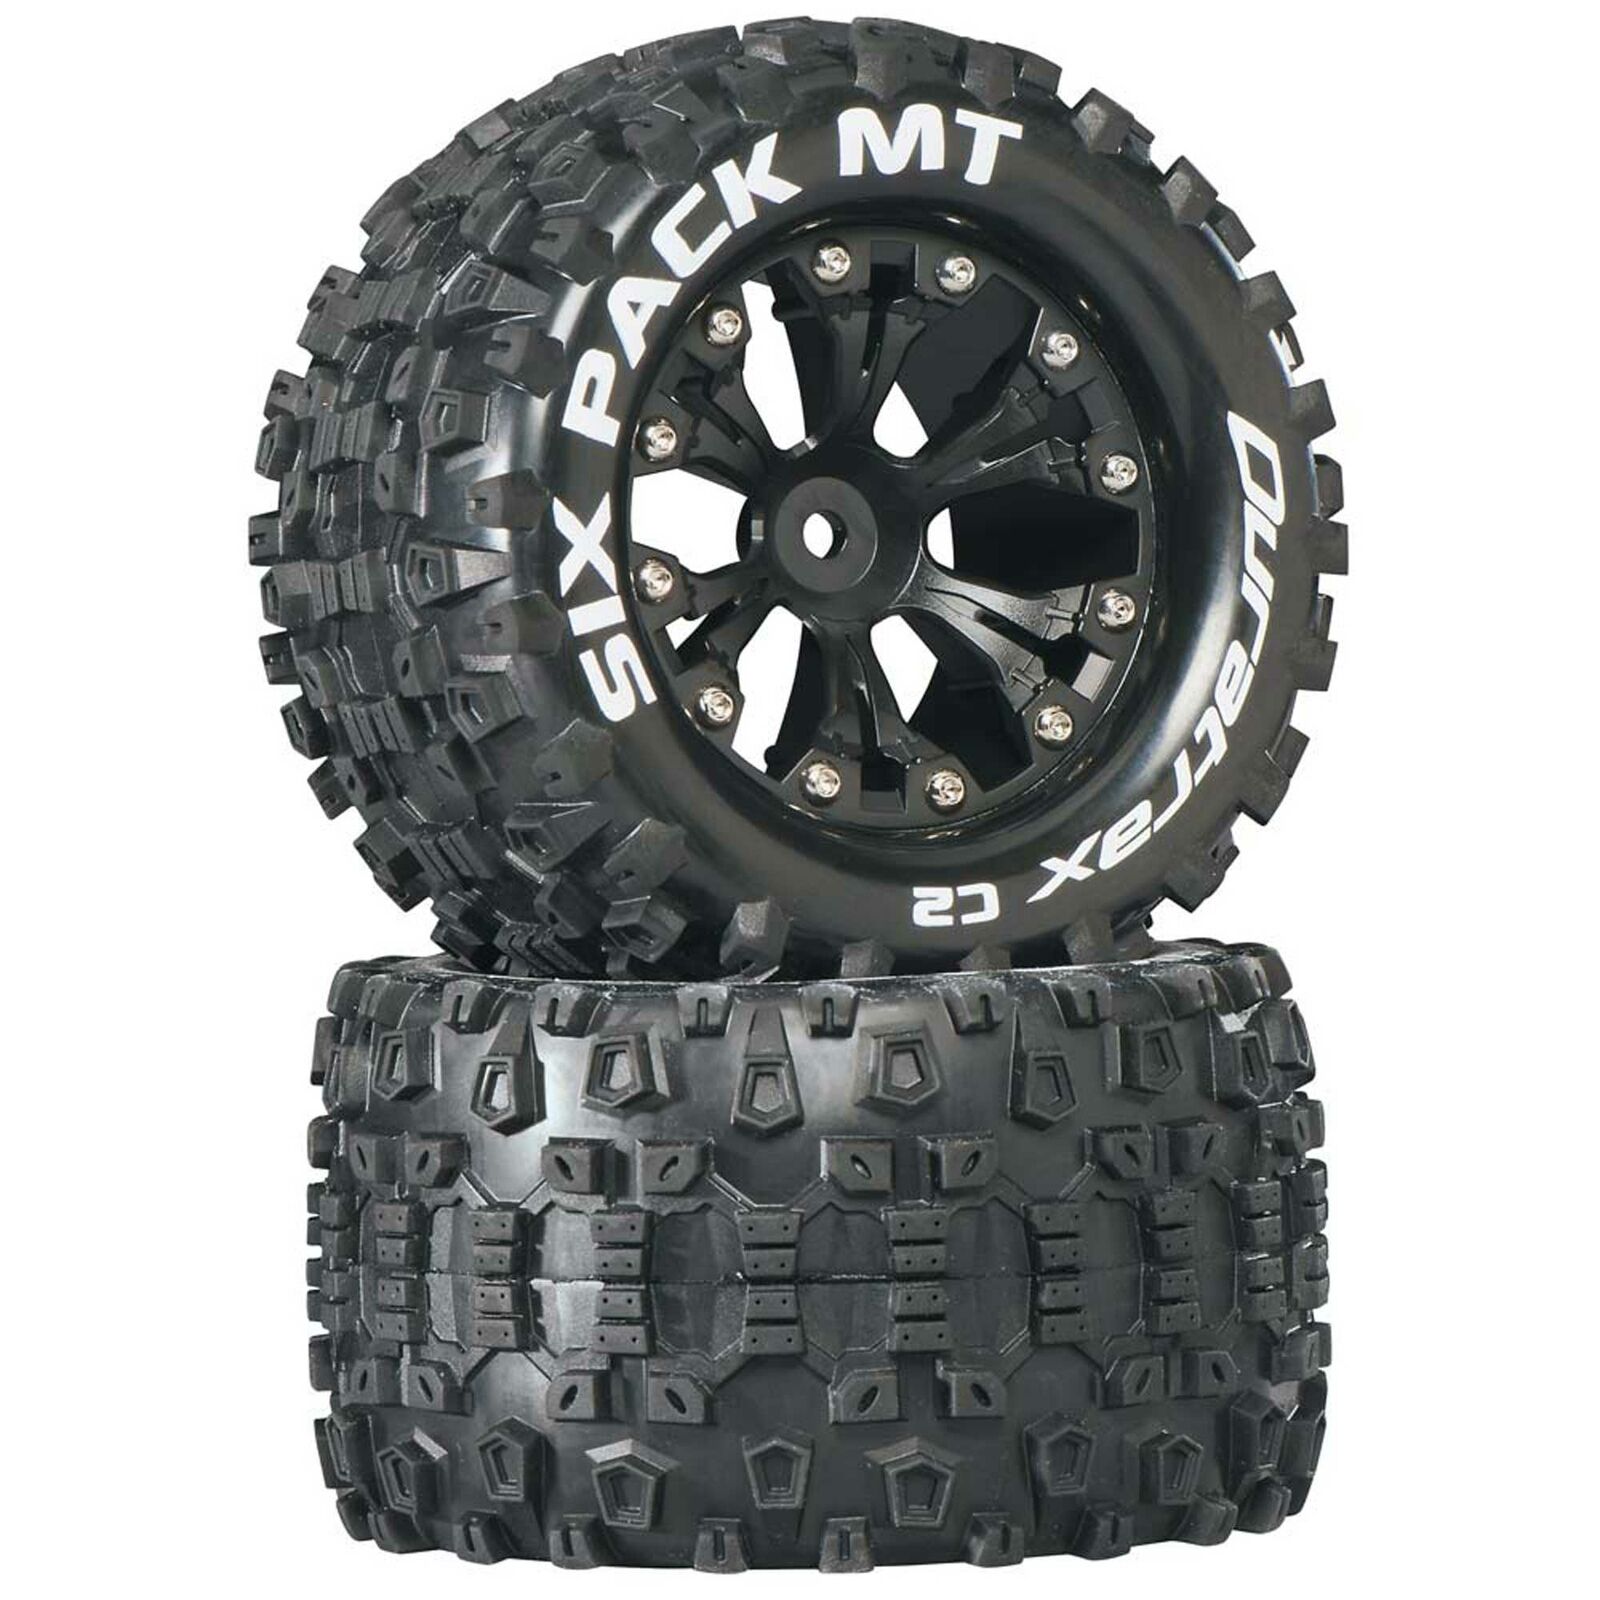 Duratrax Six-Pack MT 2.8" 2 Wheel Drive Mounted Rear C2 Tires Black 2 DTXC3520